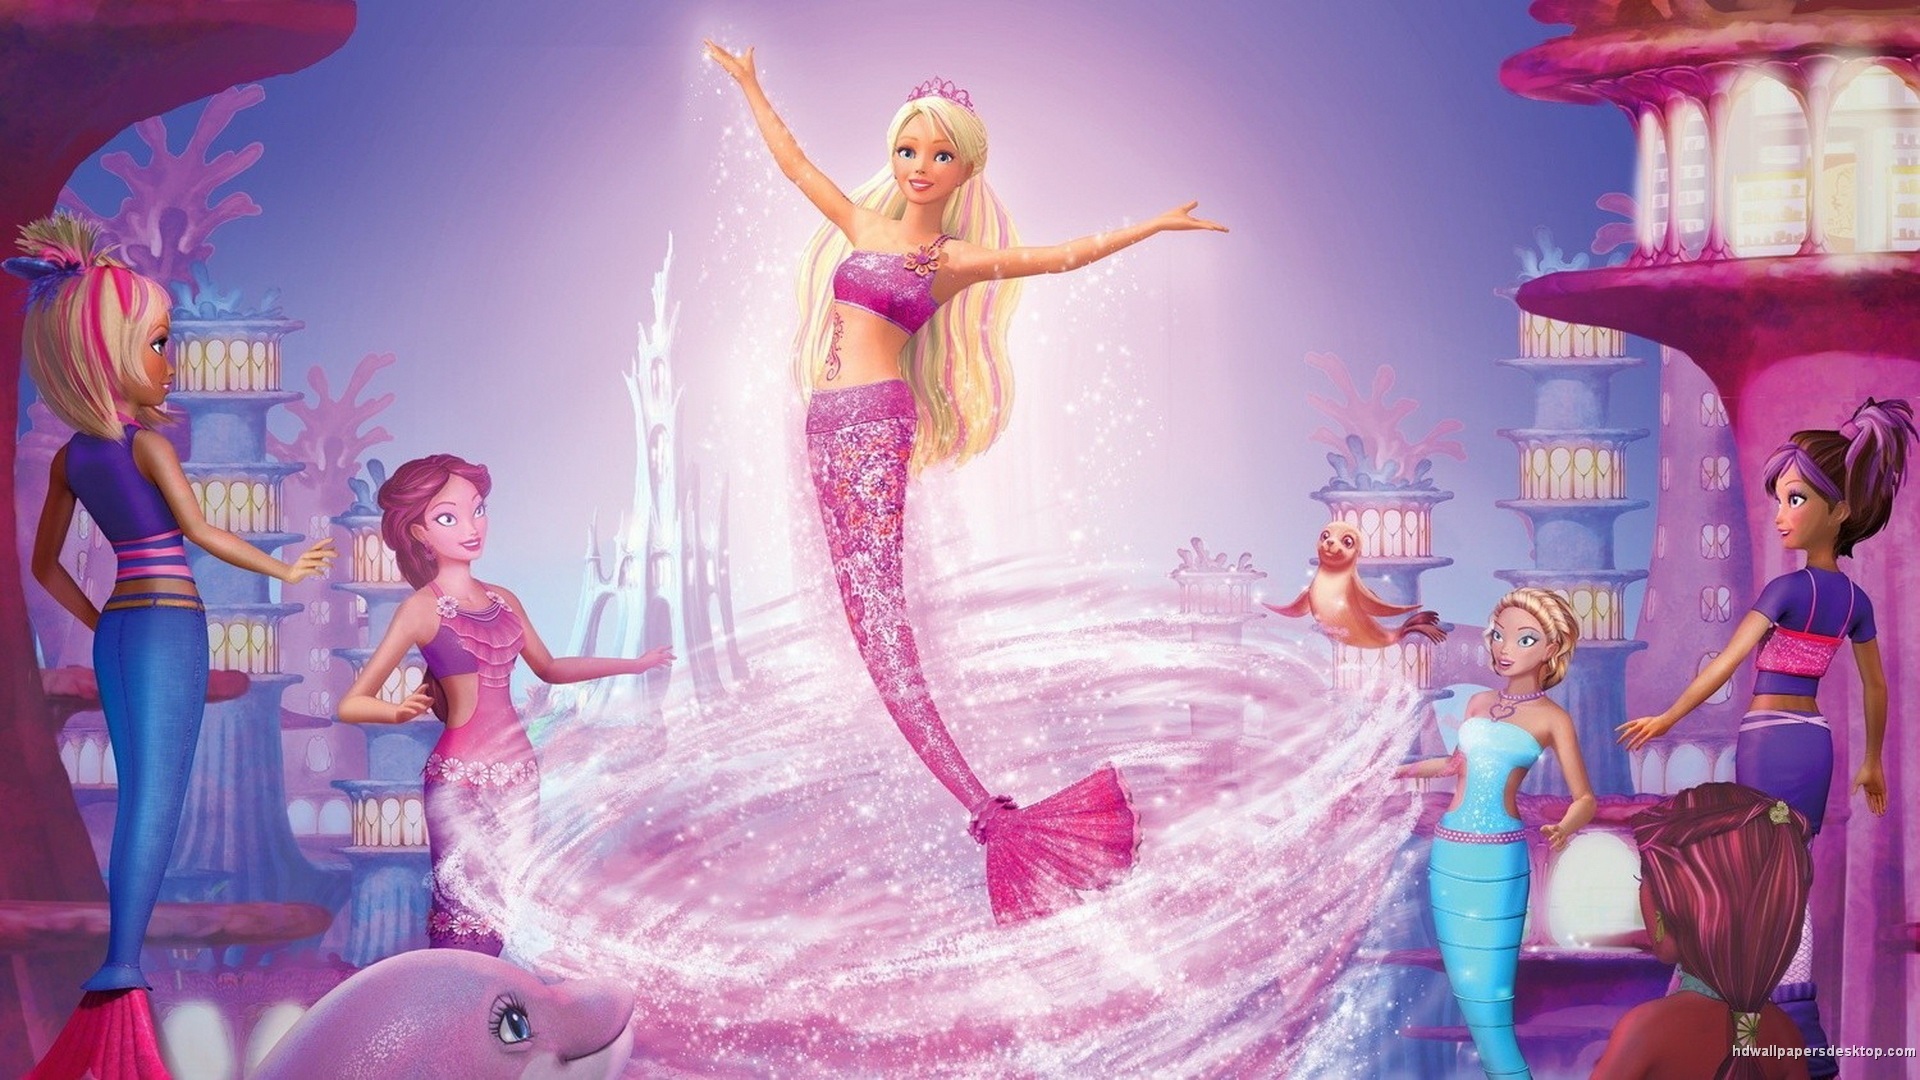 Barbie In A Mermaid Tail - abcjkl